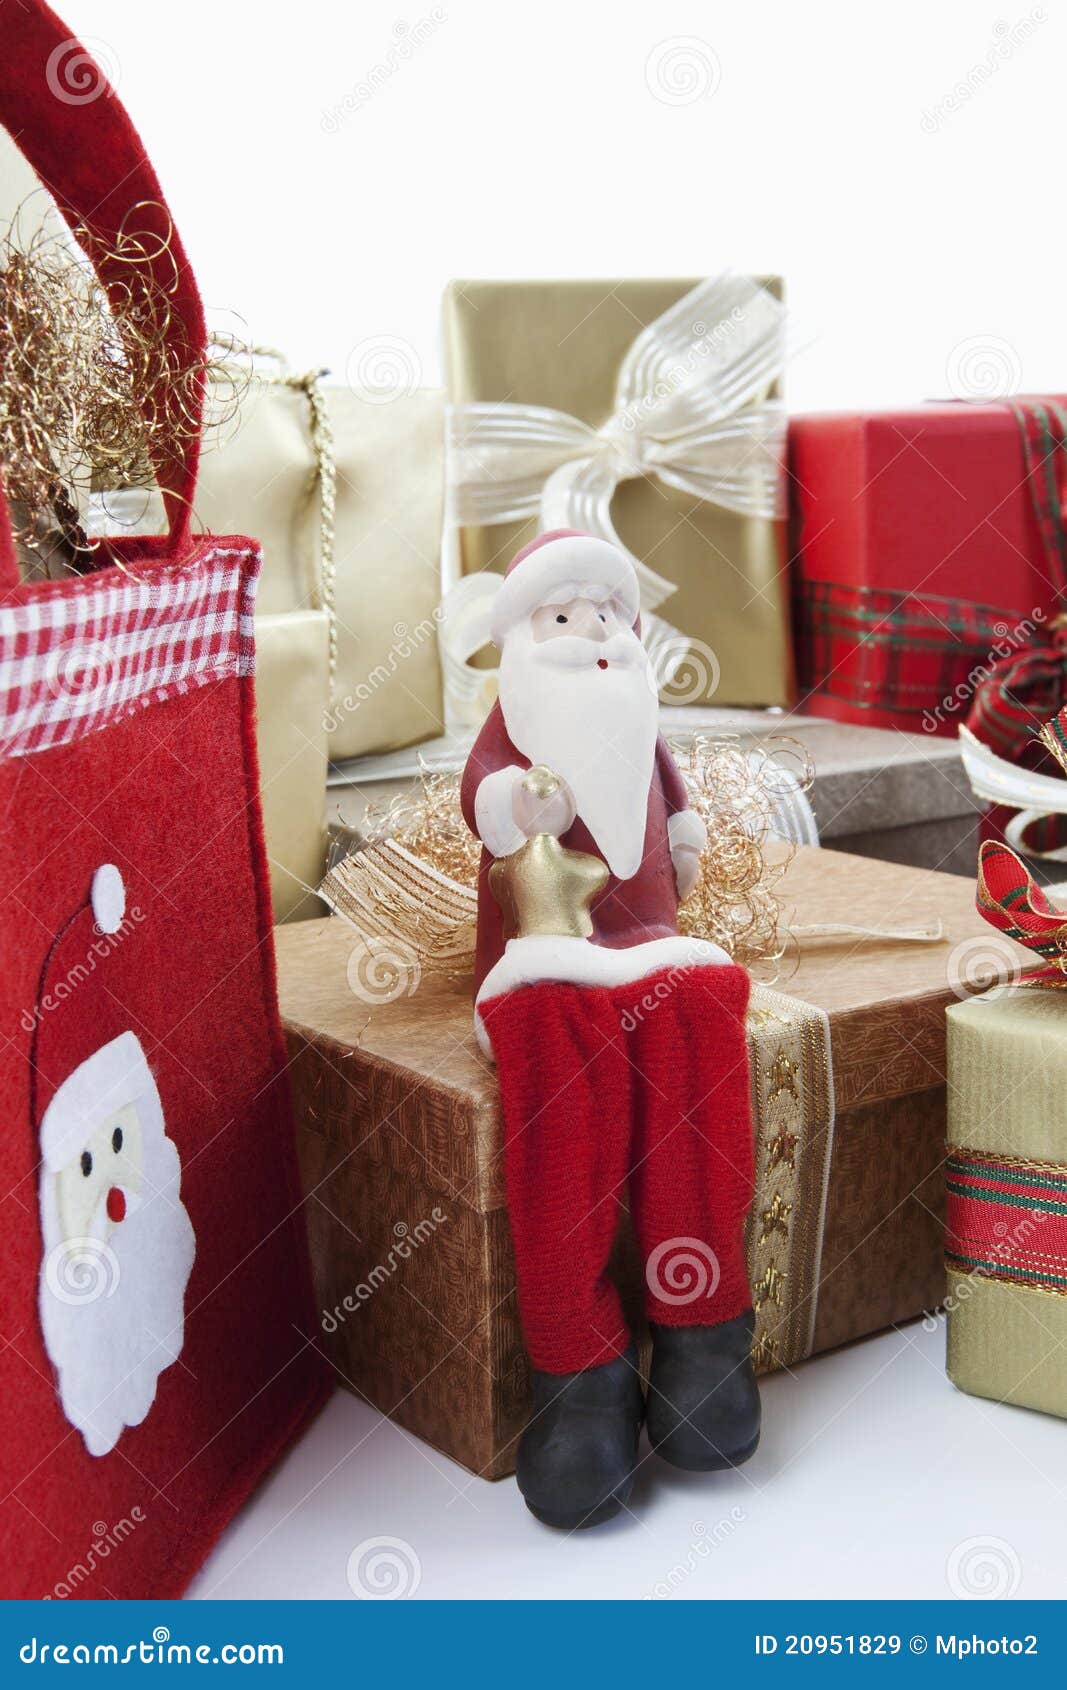 Image result for Christmas parcels